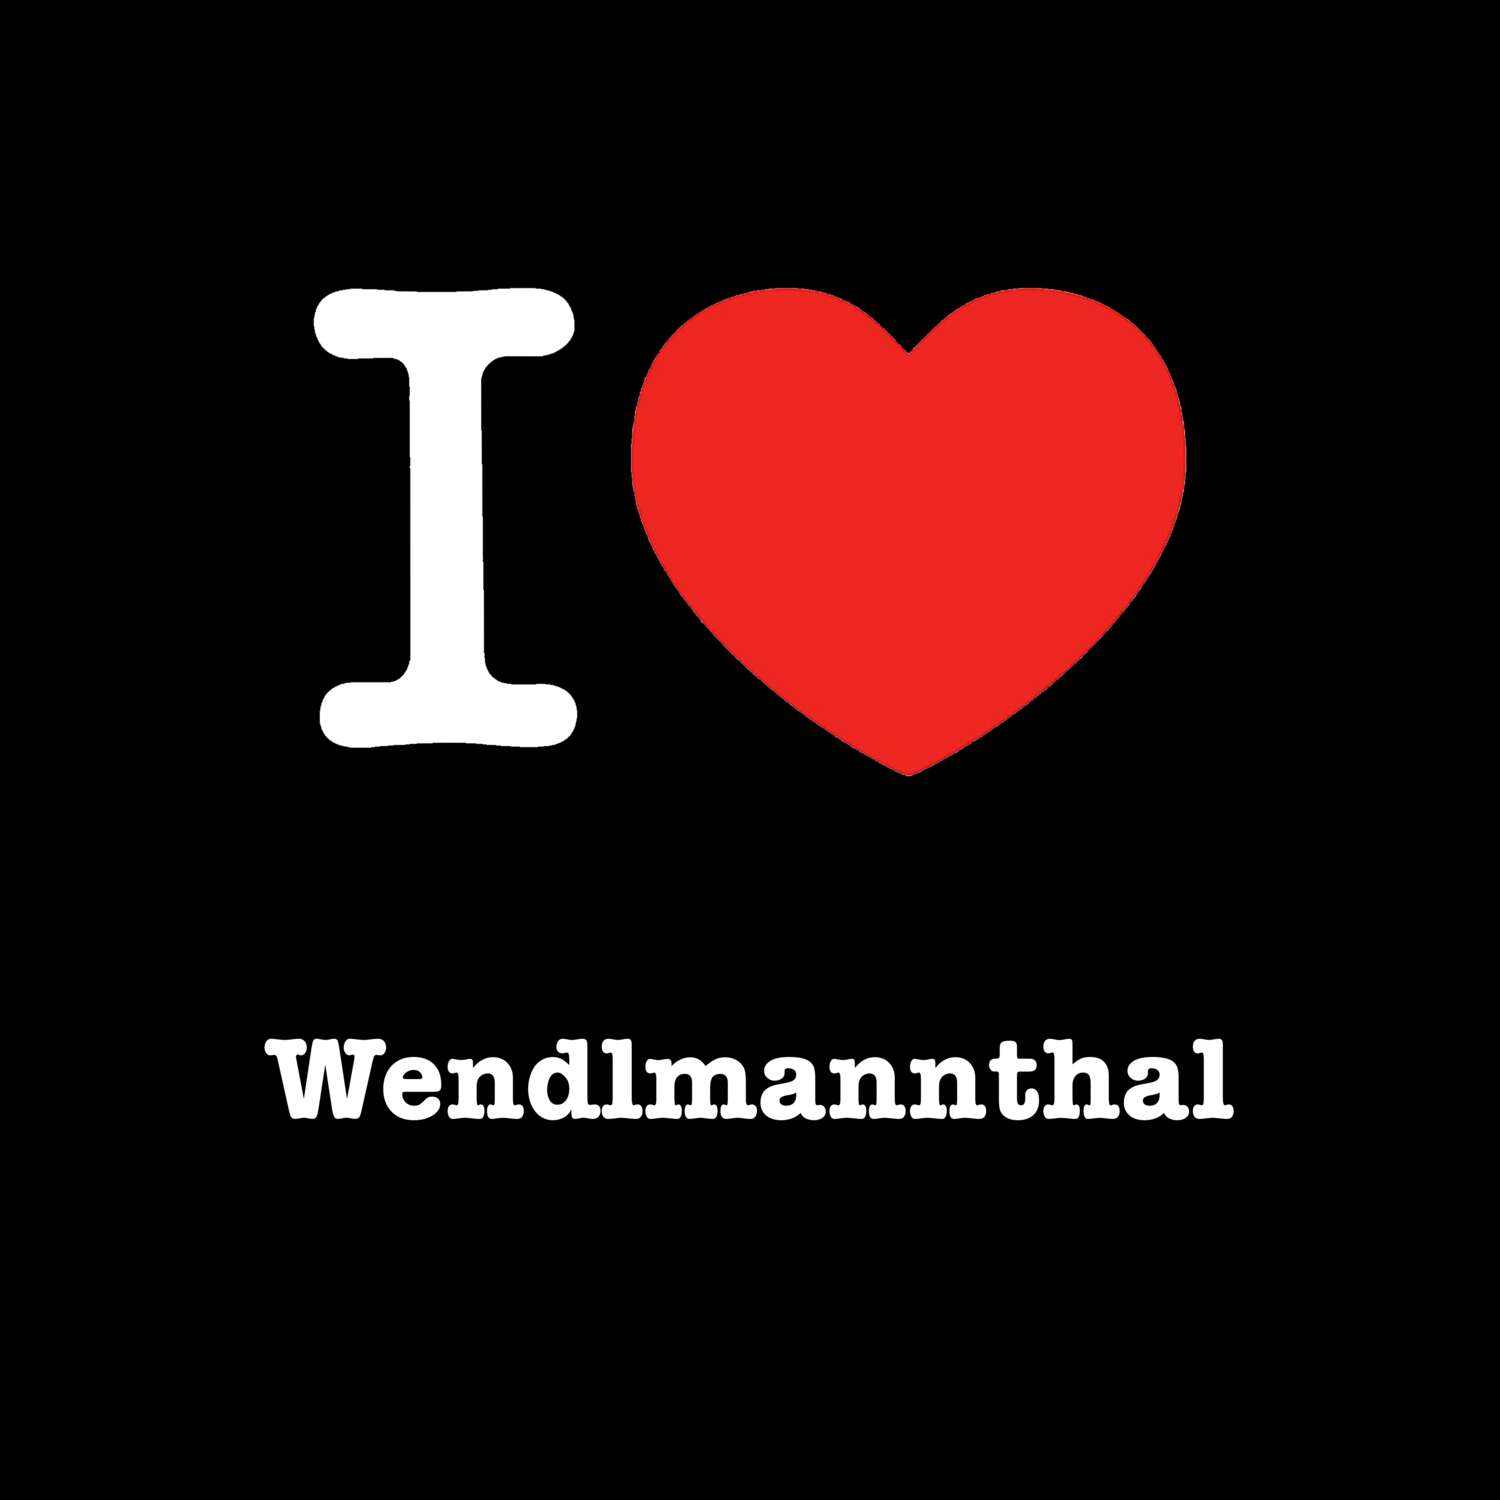 Wendlmannthal T-Shirt »I love«